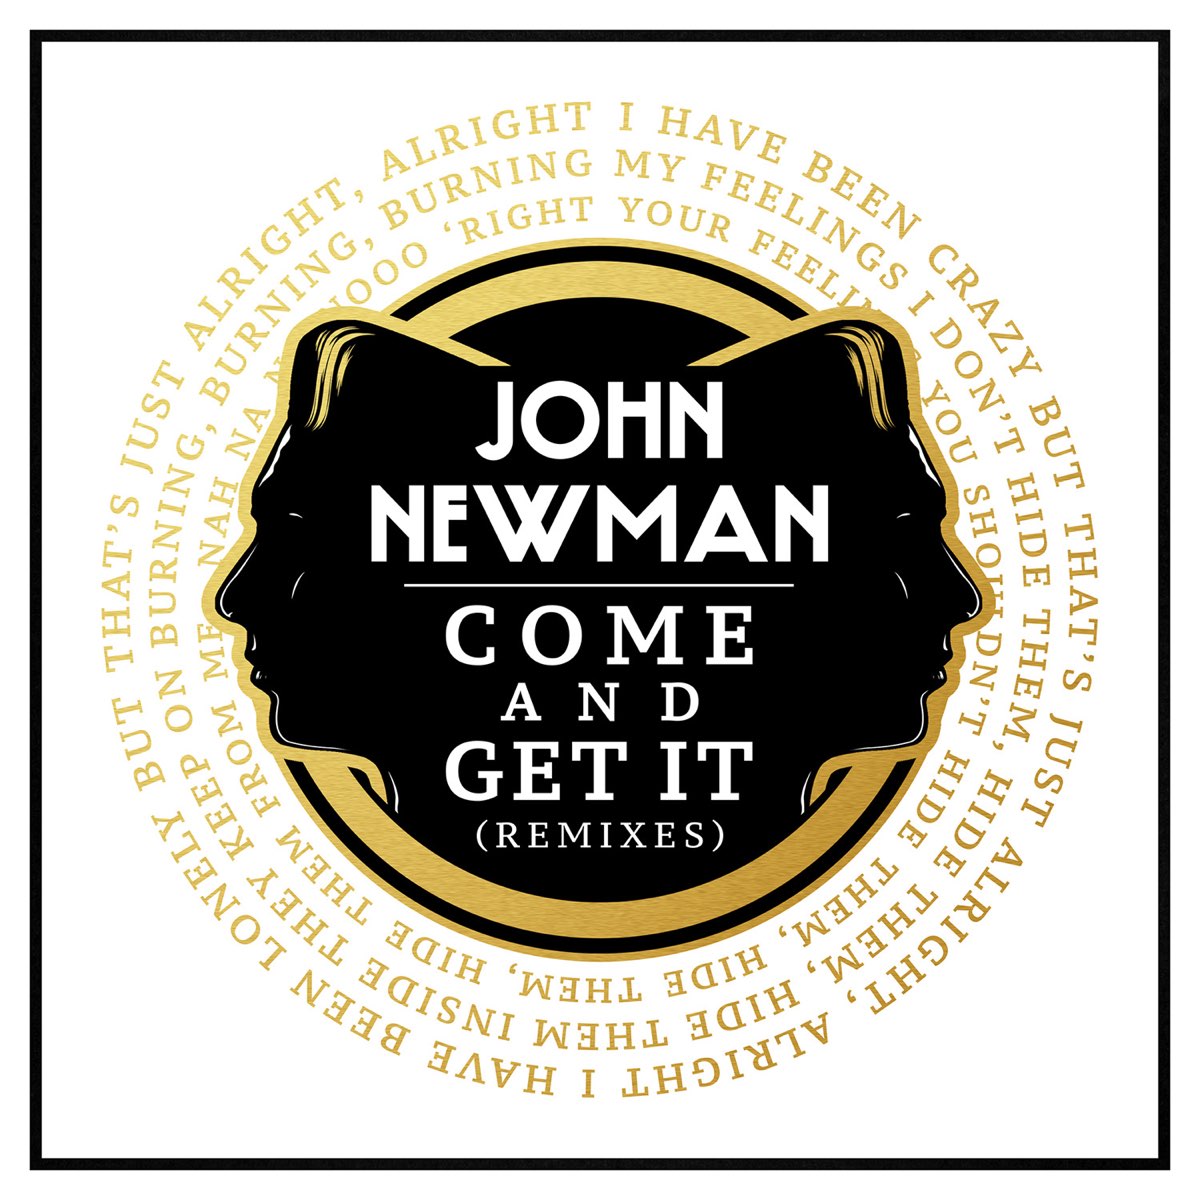 Get a new man. John Newman come and get it. John Newman песни. Get get ремикс. John Newman tiring game.